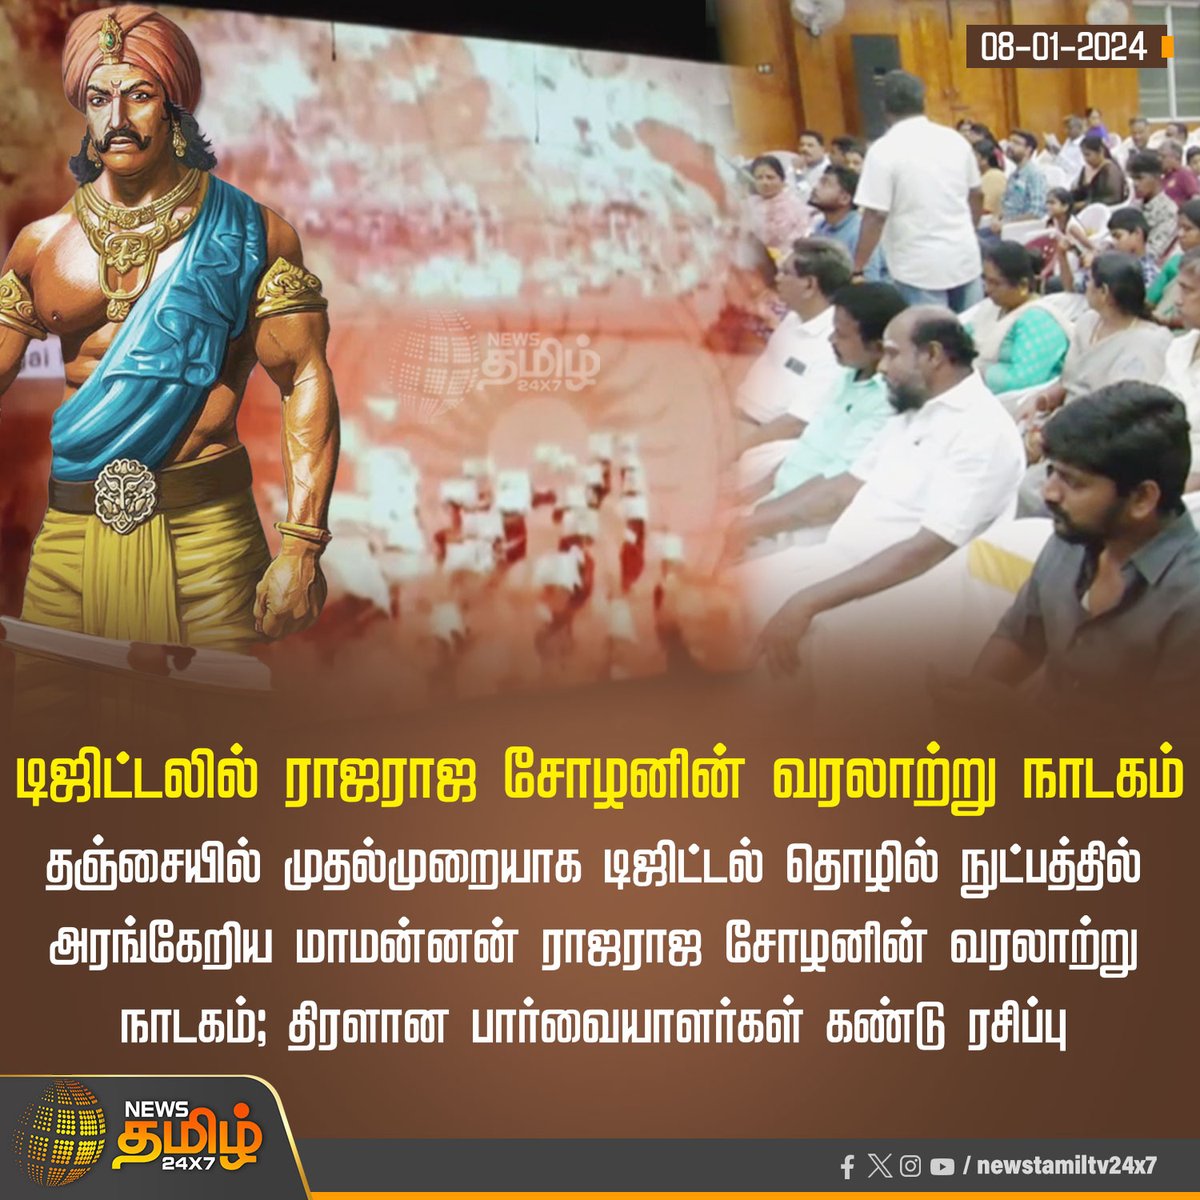 #NewsUpdate | டிஜிட்டலில் ராஜராஜ சோழனின் வரலாற்று நாடகம்

#Rajarajacholan | #mamannan | #Historicaldrama | #Digital | #NewsTamil24x7